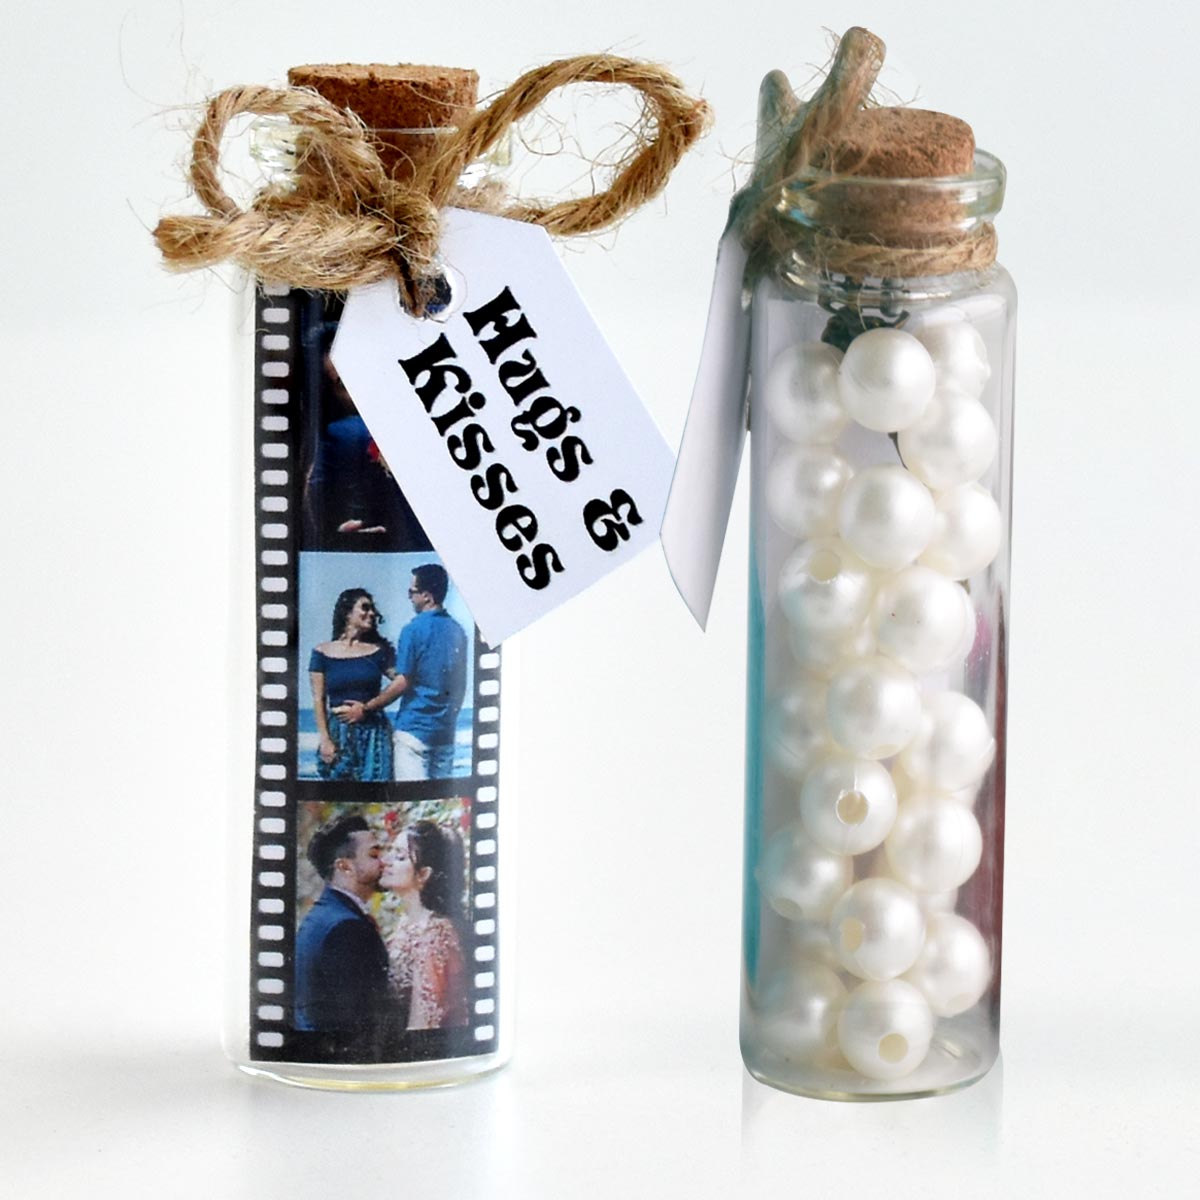 Movie Theme Photo Message Bottle-1